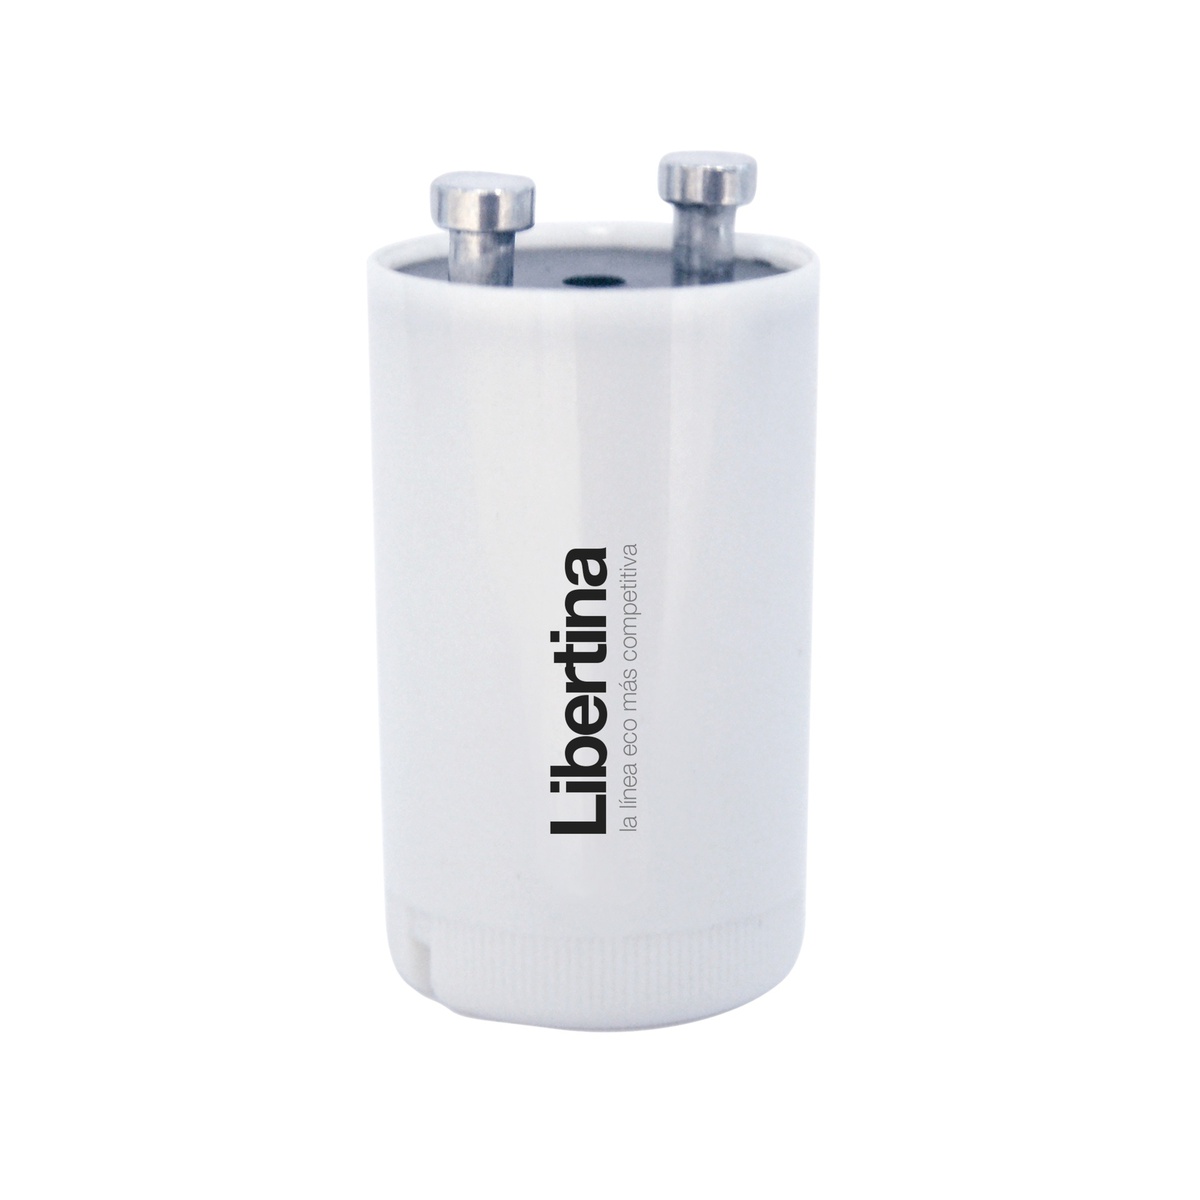 Cebador para tubo LED T8 - Libertina